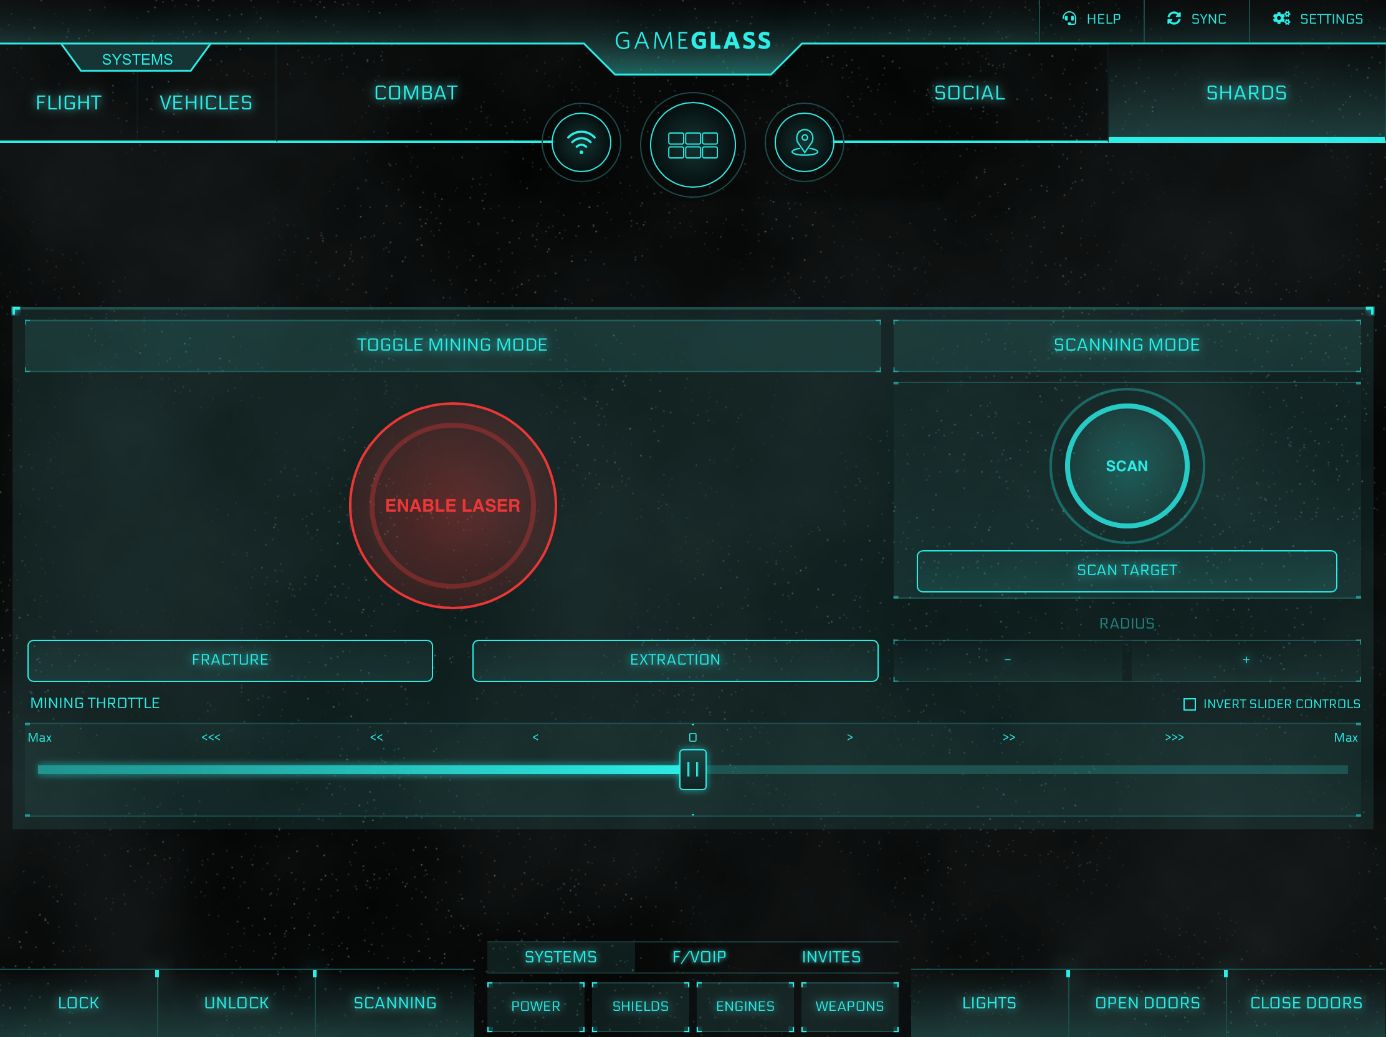 Steam Grid View images for Star Citizen : r/starcitizen